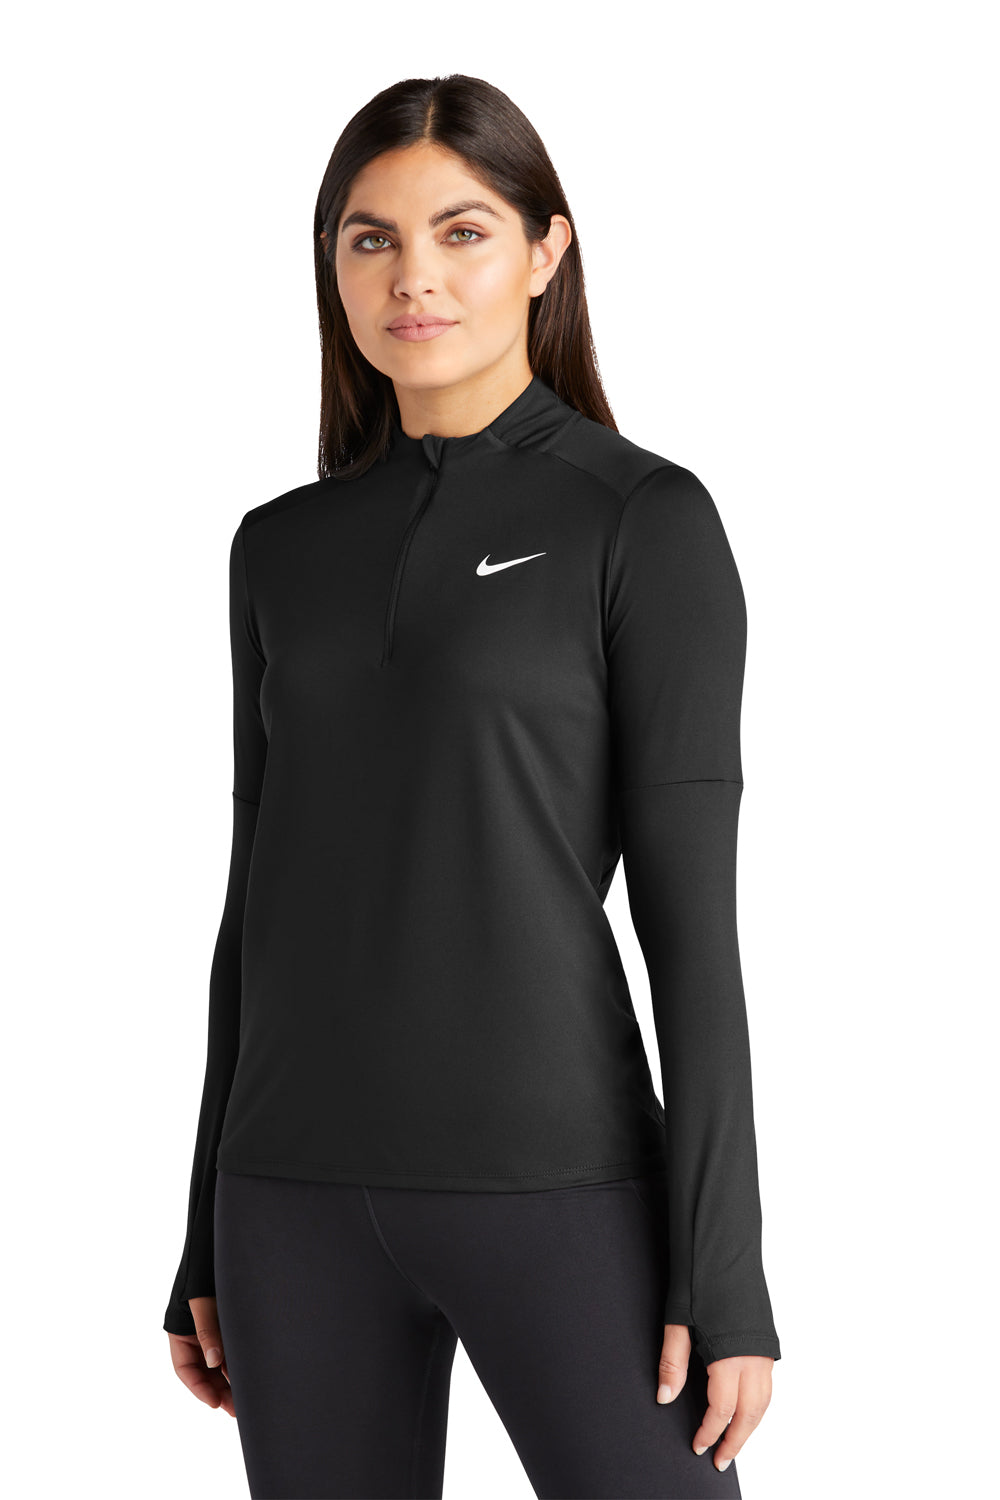 Nike NKDH4951 Womens Element Dri-Fit Moisture Wicking 1/4 Zip Sweatshirt Black Model 3Q